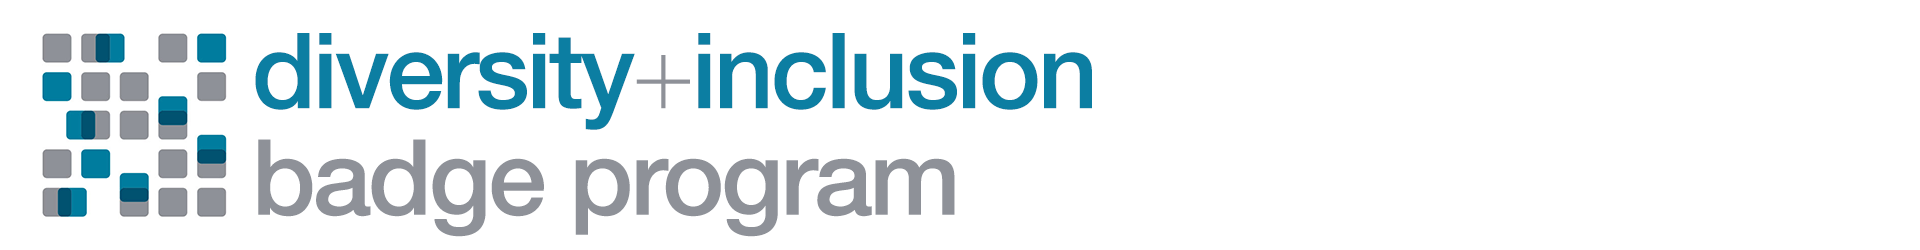 diversity and inclusion badge program logo